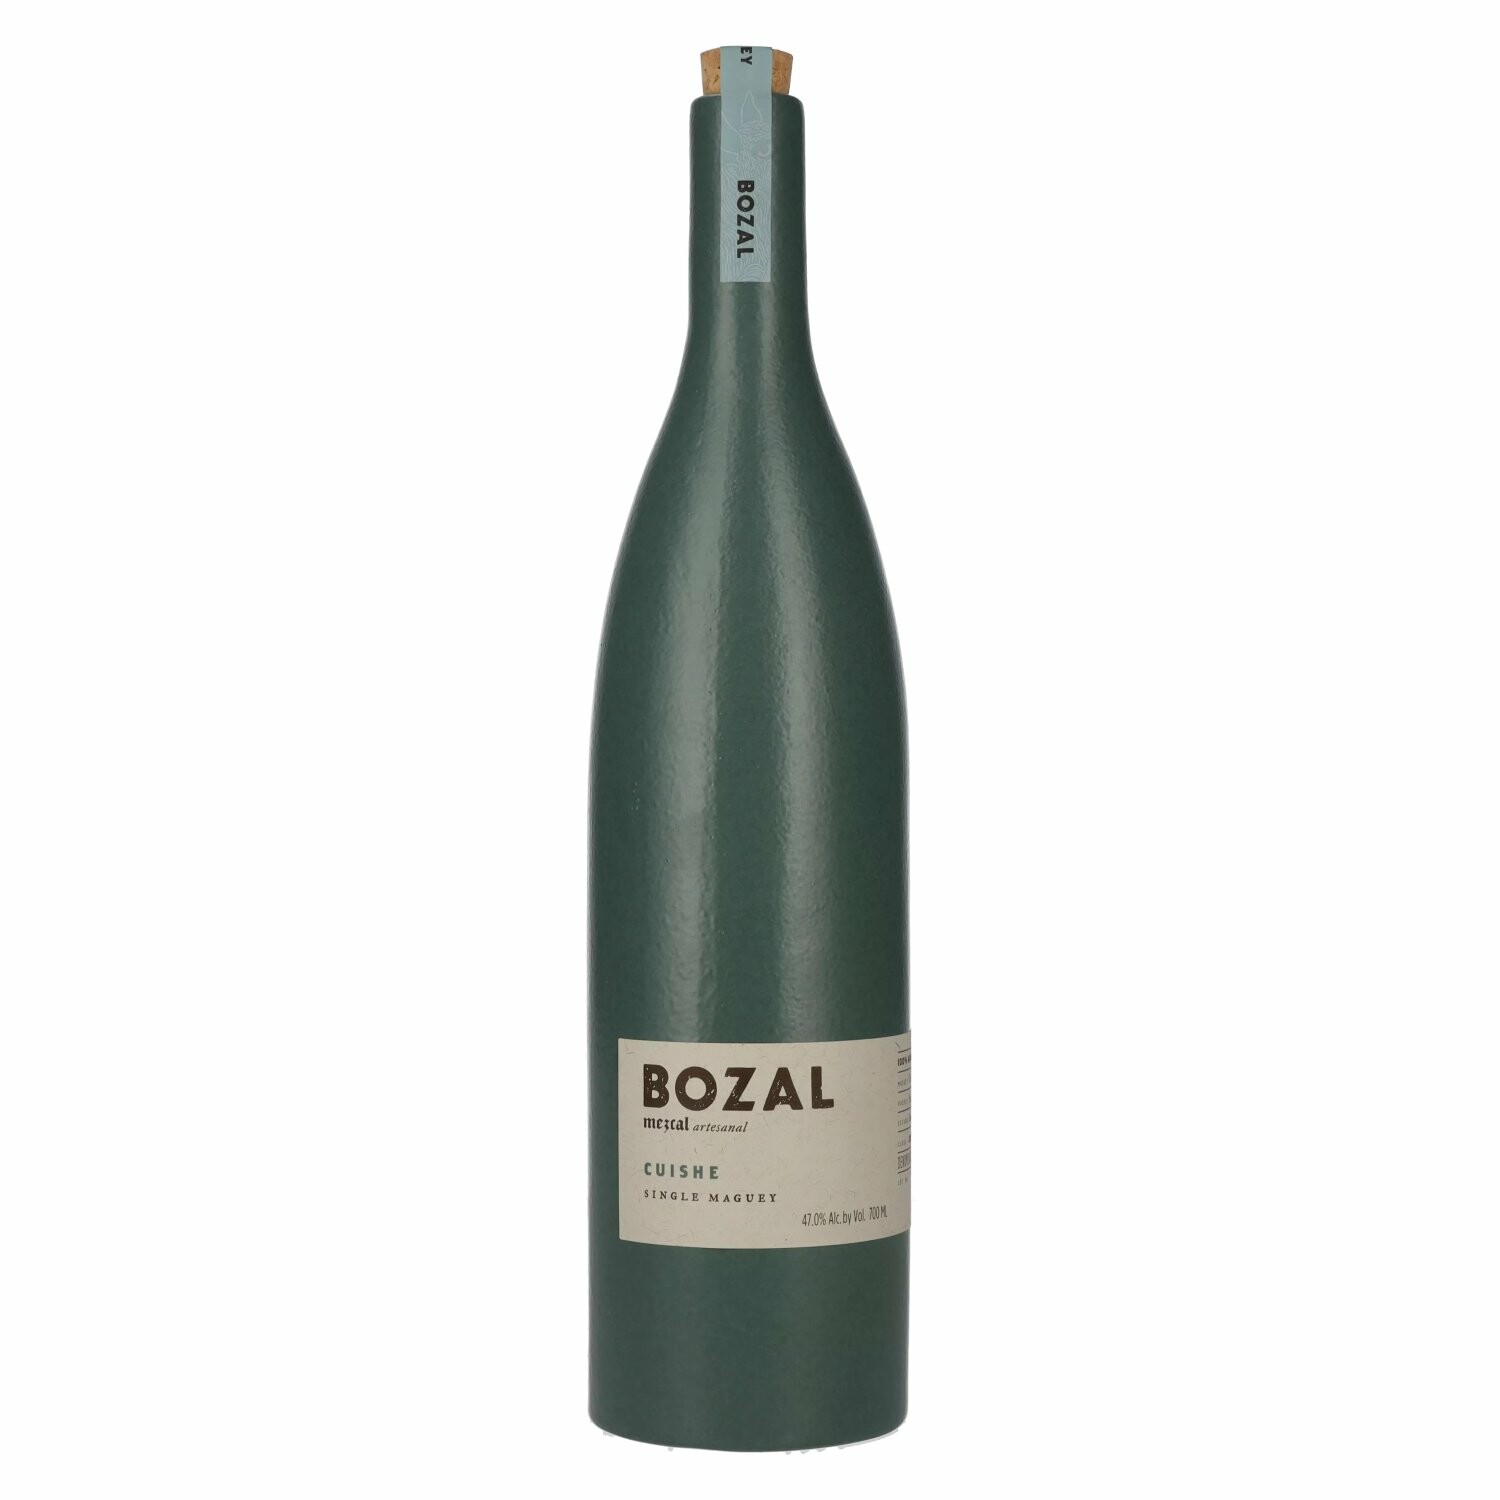 Bozal Single Maguey CUISHE Mezcal 47% Vol. 0,7l